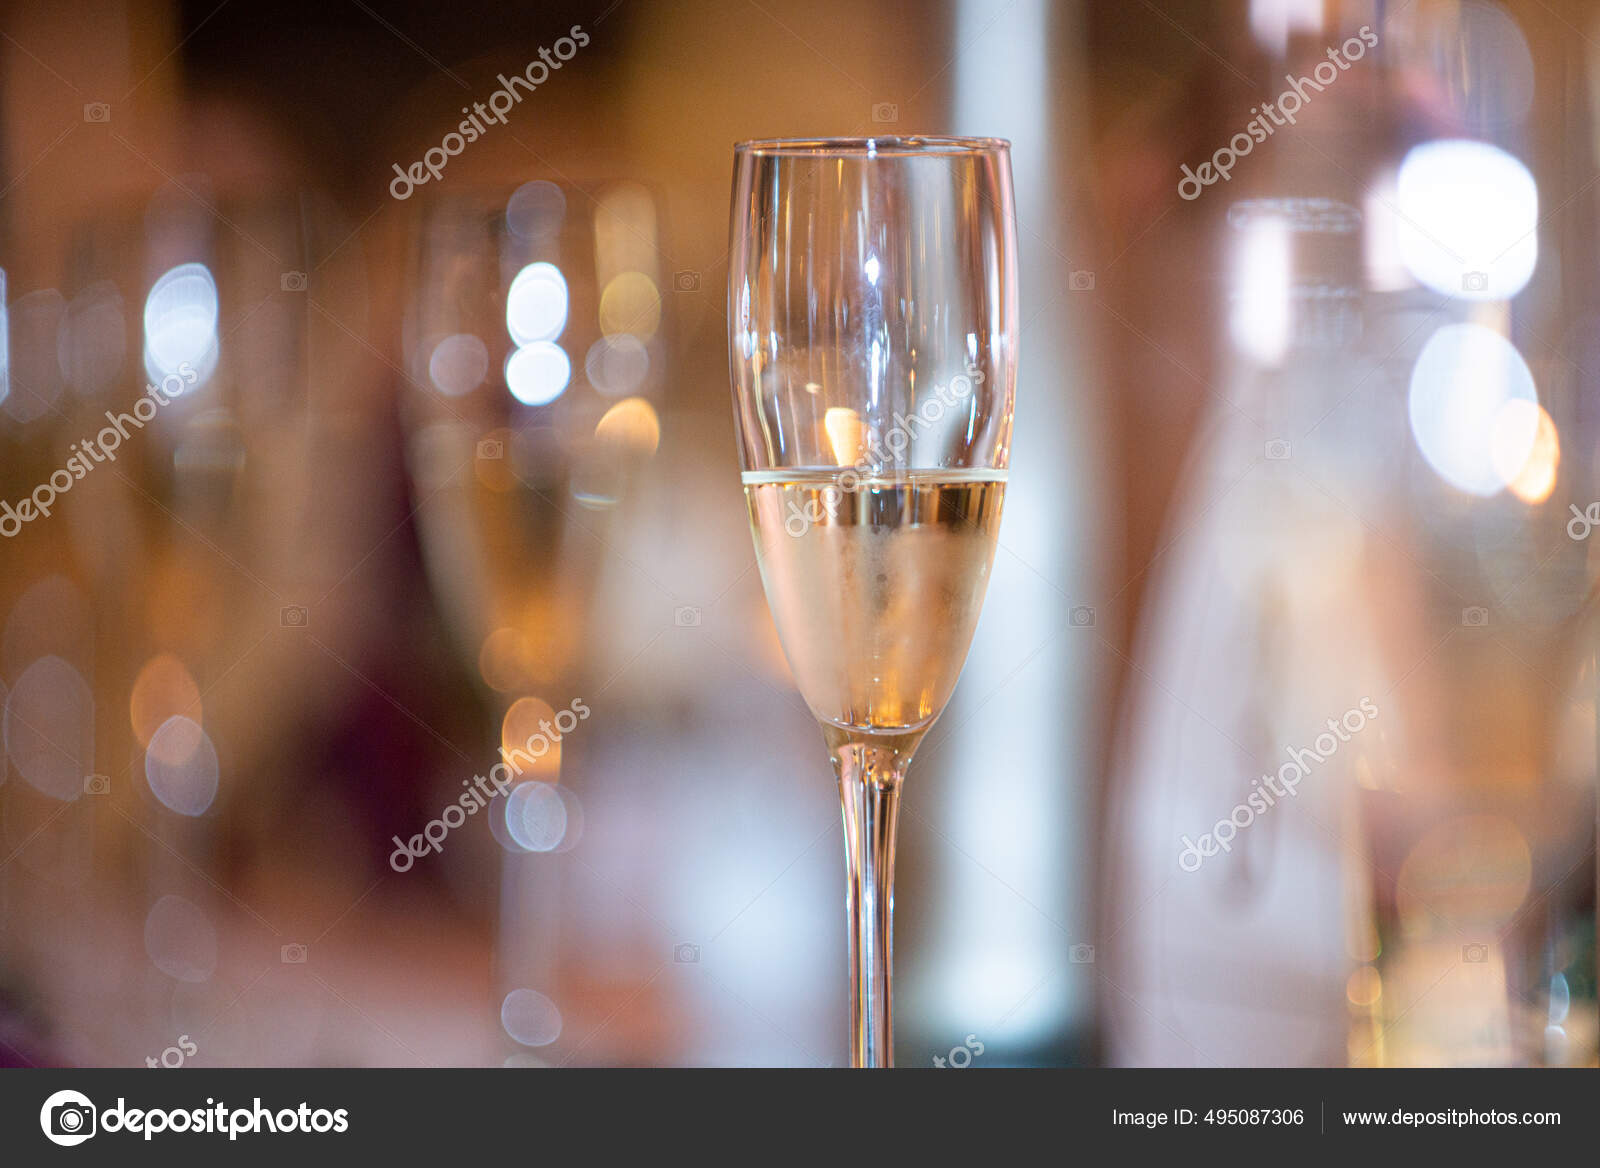 https://st2.depositphotos.com/26566412/49508/i/1600/depositphotos_495087306-stock-photo-champagne-filled-glasses-lined-ready.jpg